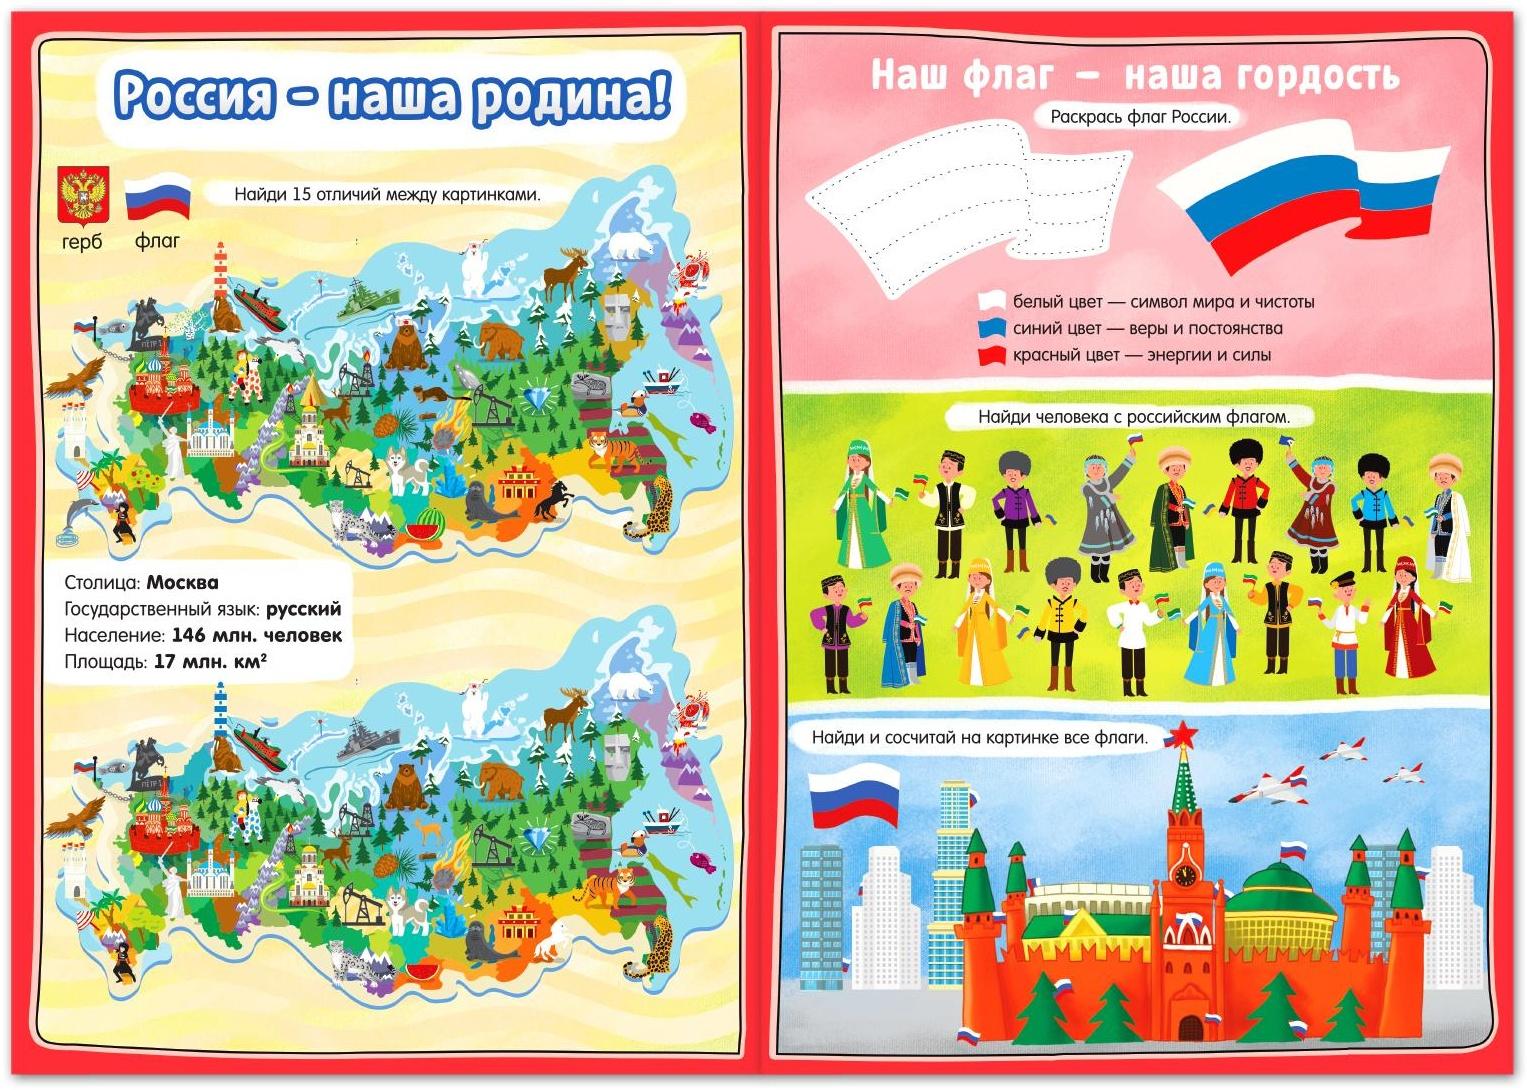 Книги набор «Моя Россия», 4 шт. по 16 стр., формат А4